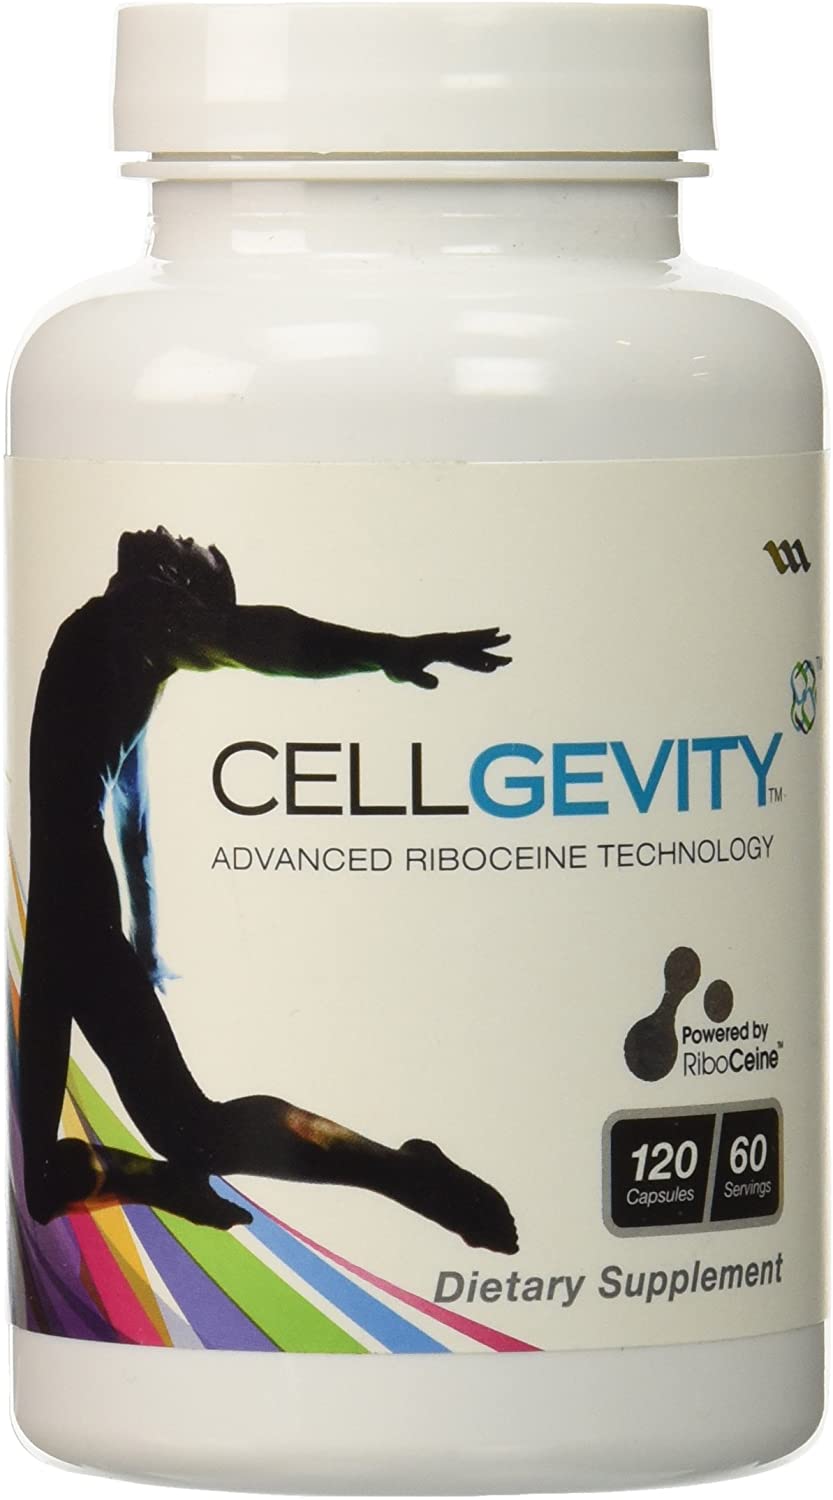 Cellgevity Advanced Riboceine Technology 120 Tablet